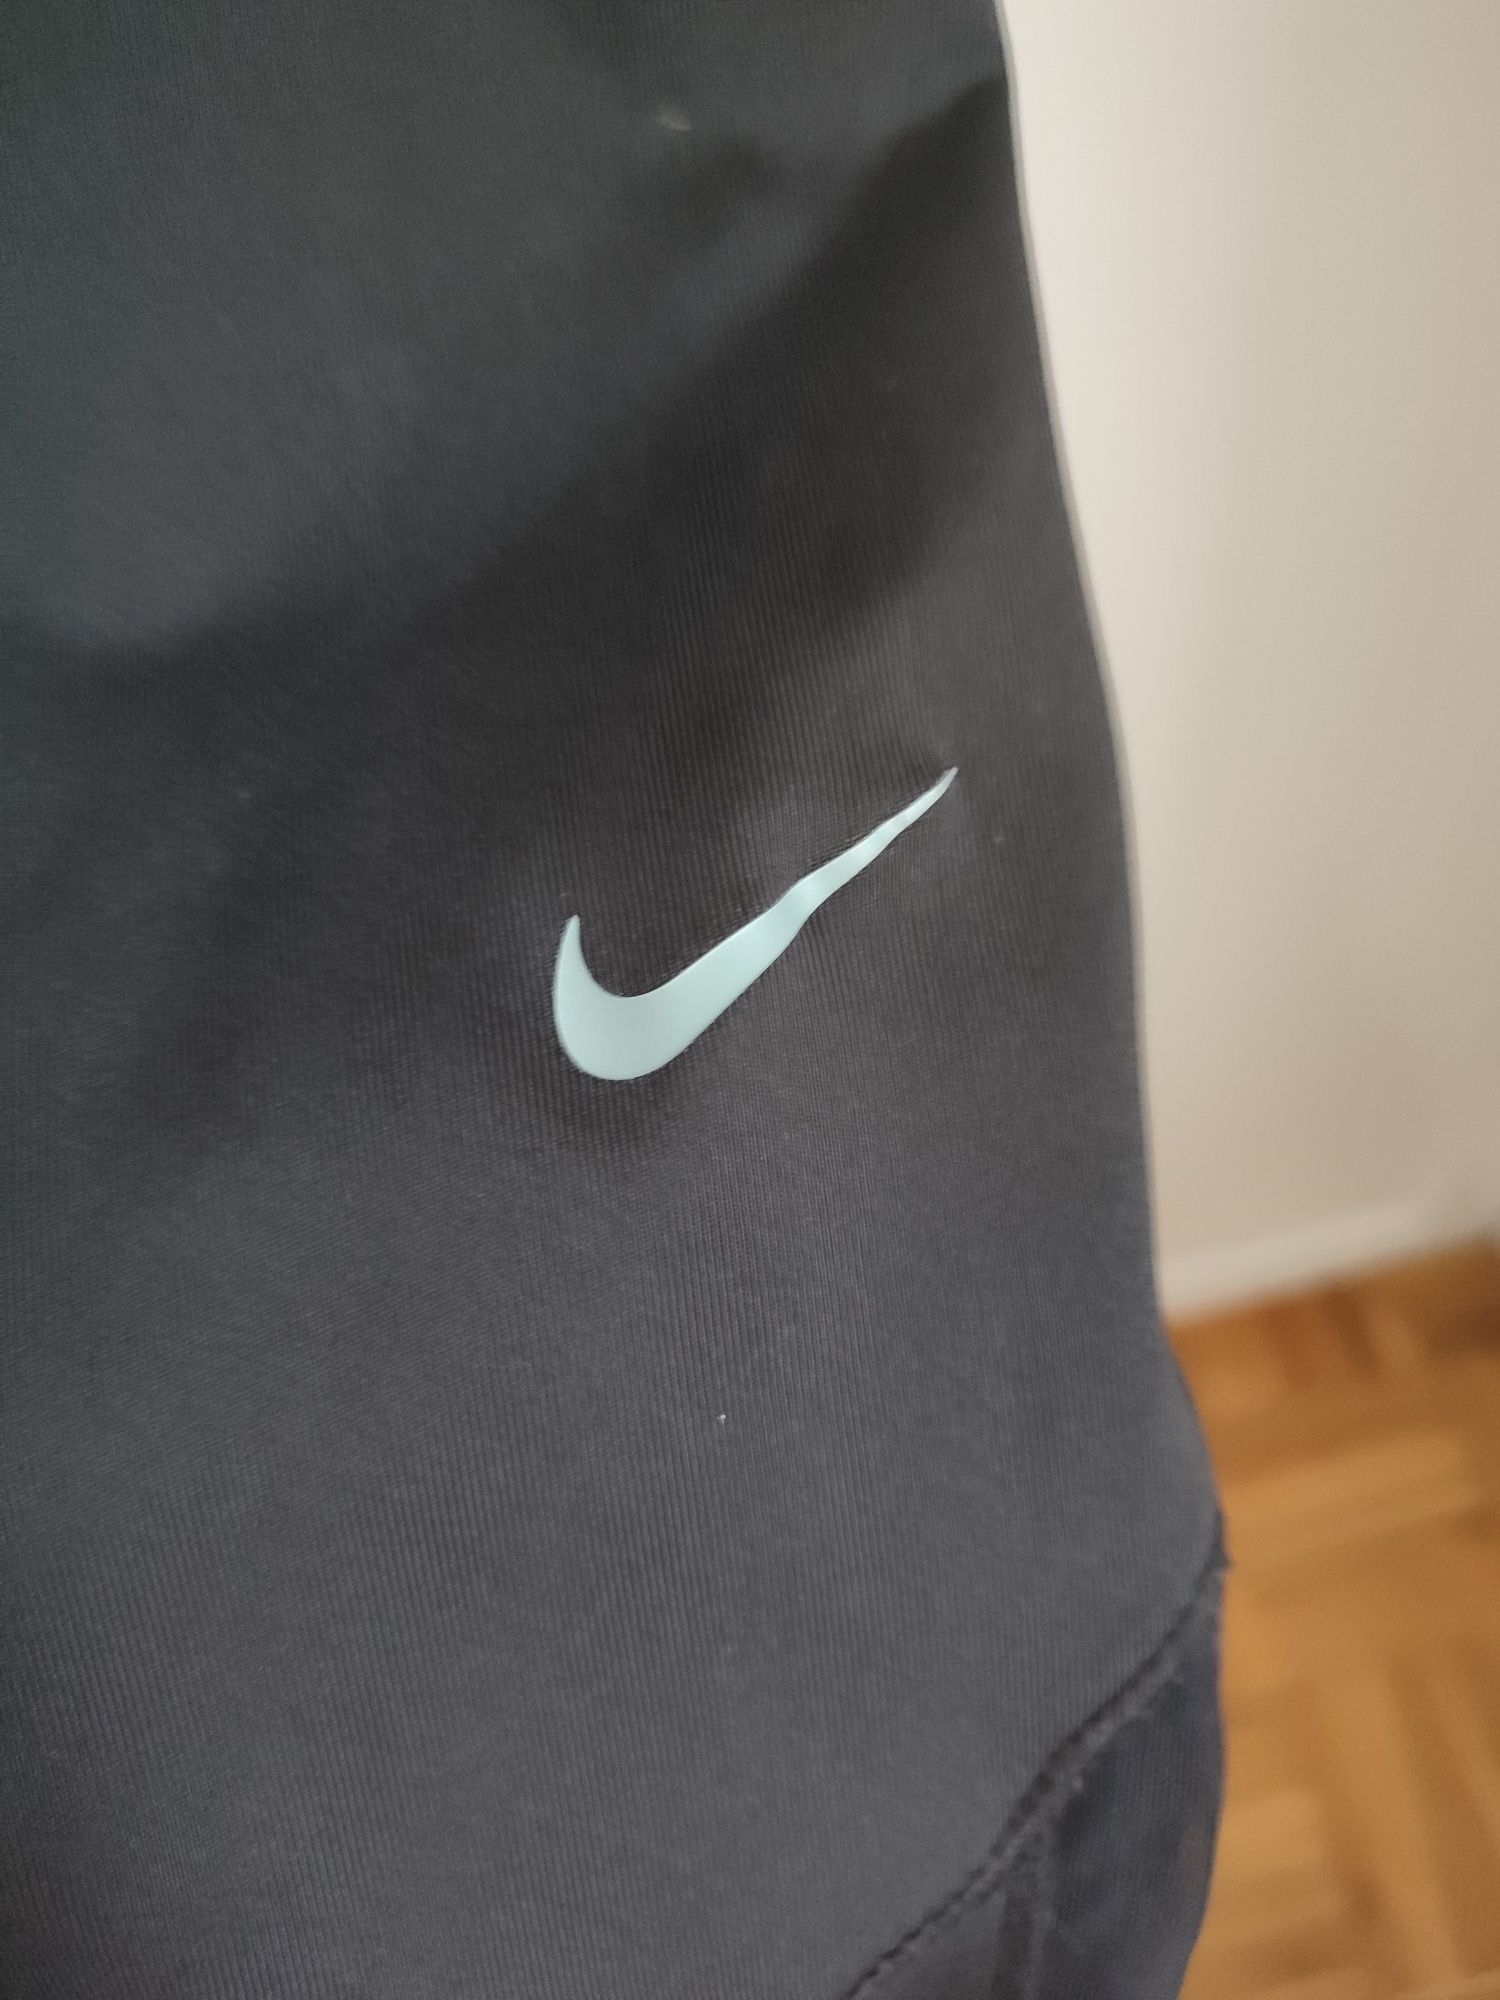 Leginsy Nike pro